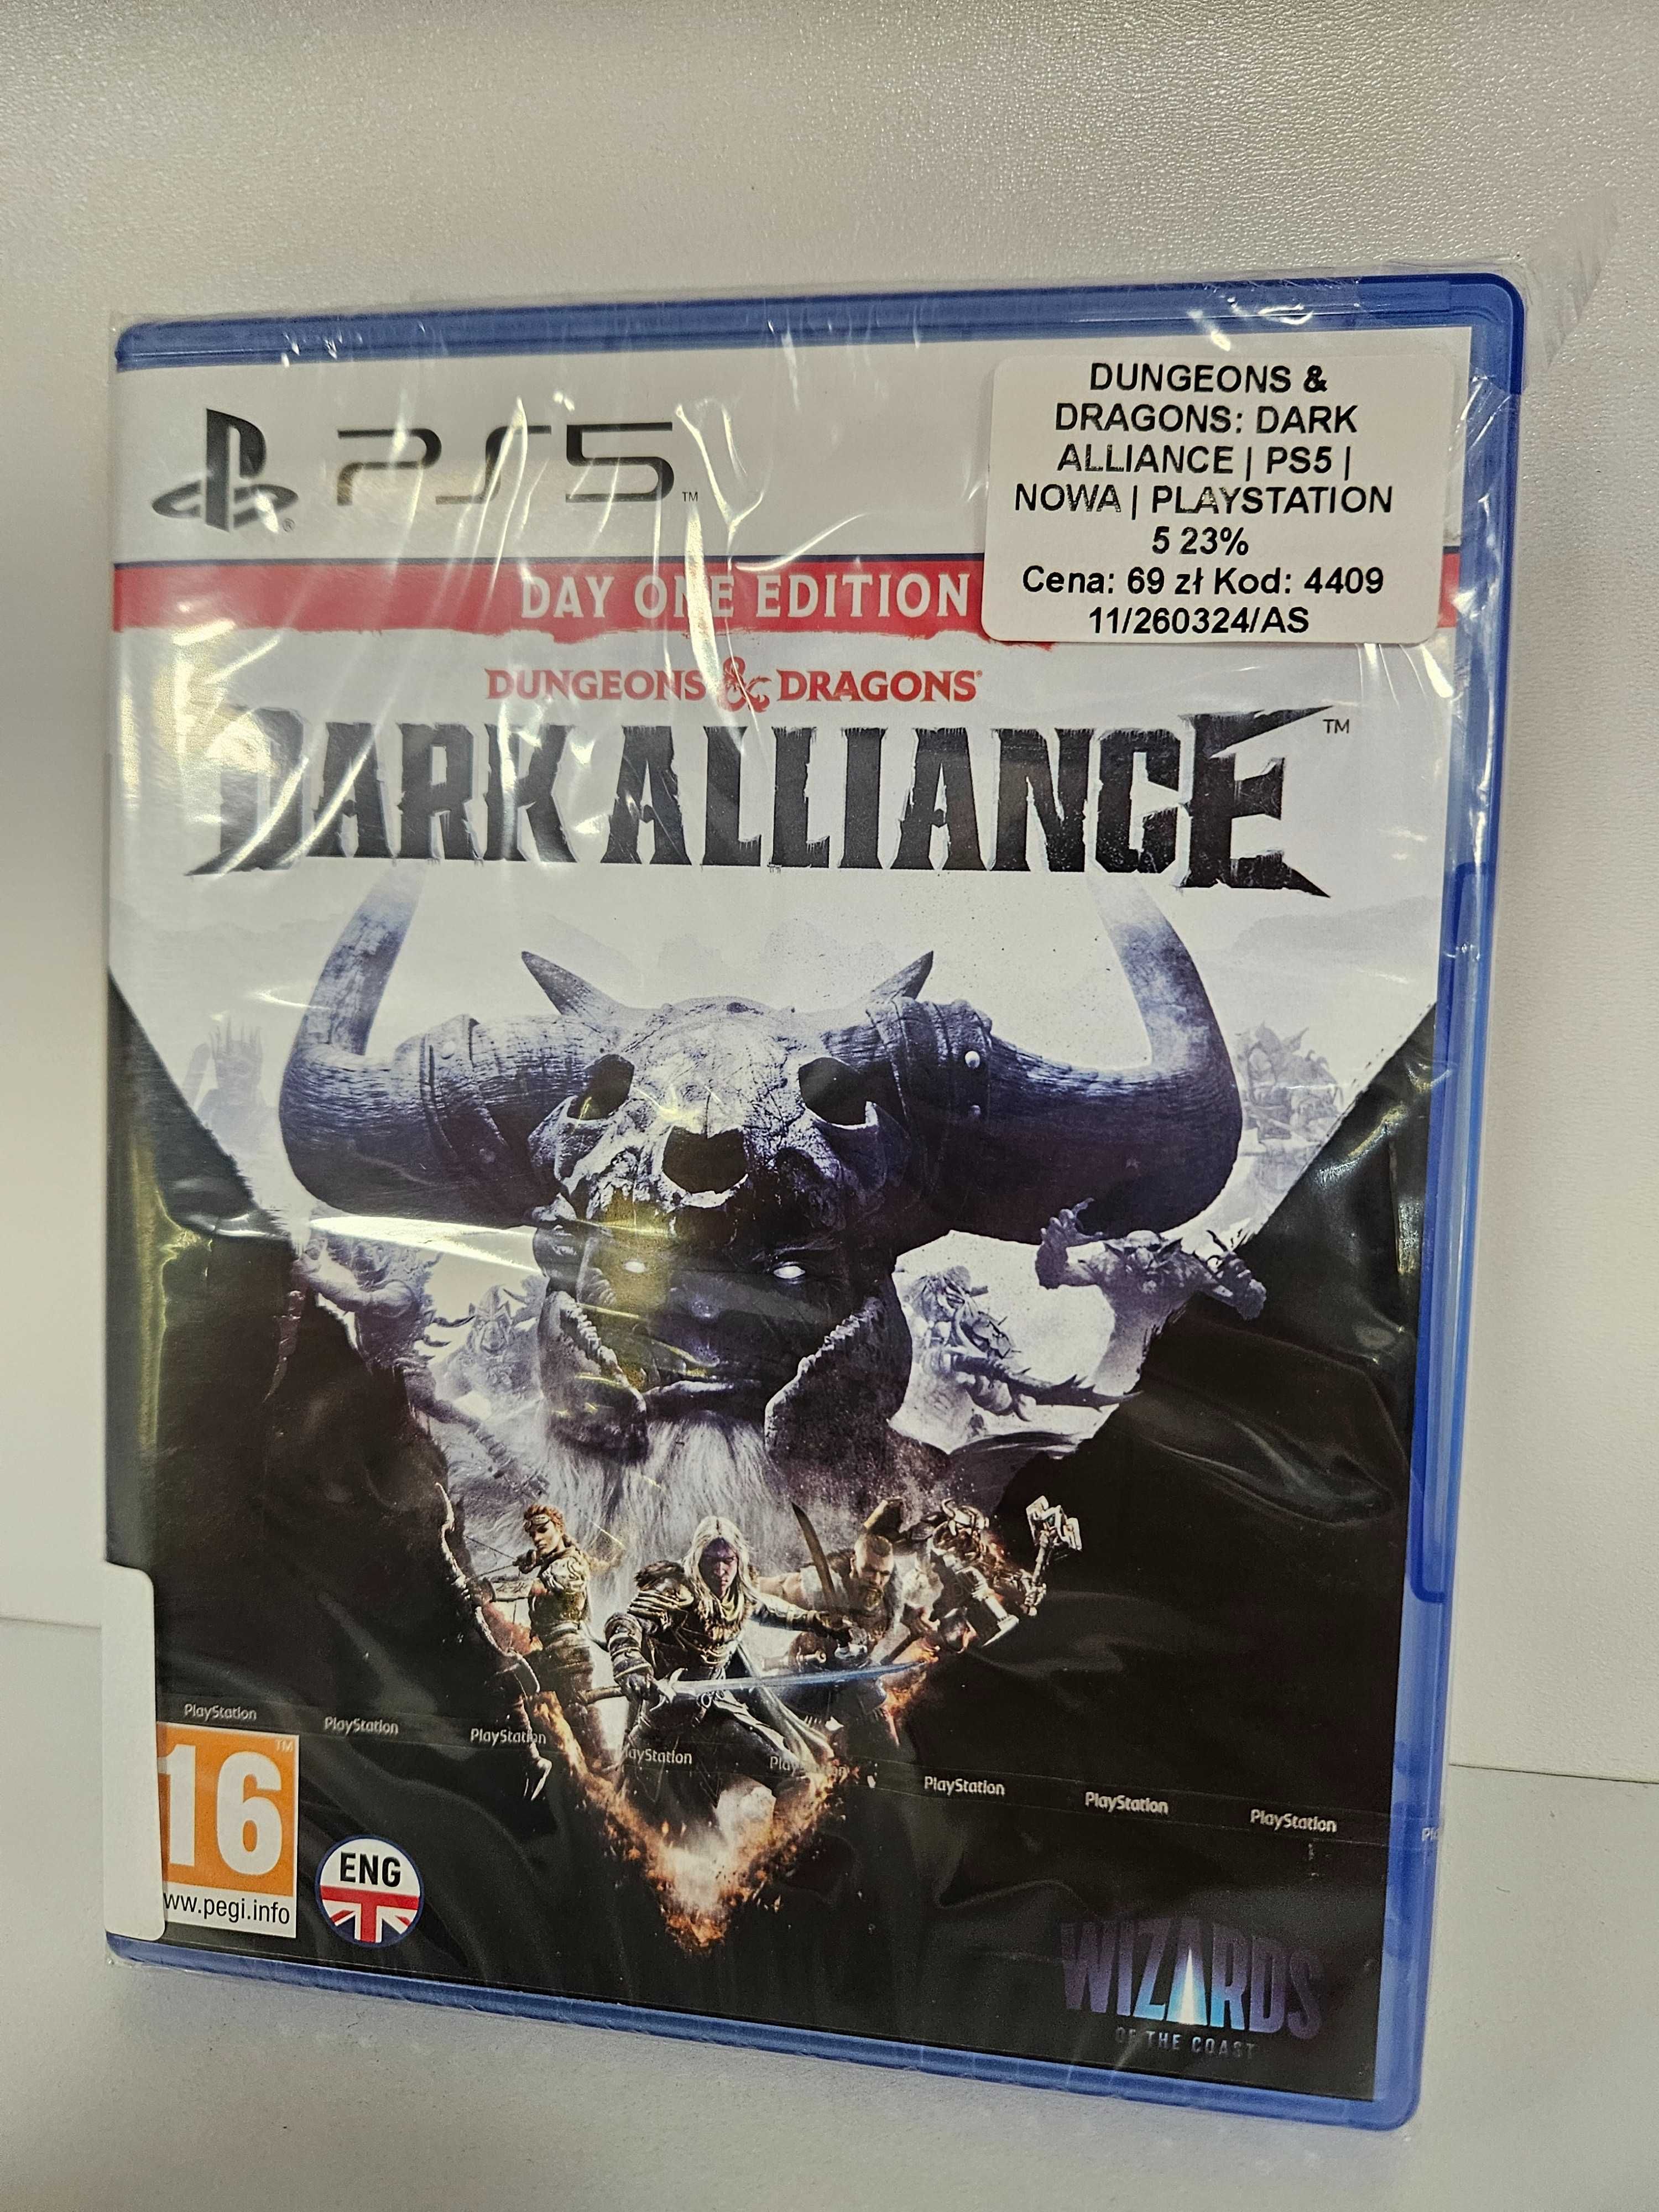 Dungeons & Dragons Dark Alliance PS5 - Nowa - As Game & GSM 4409